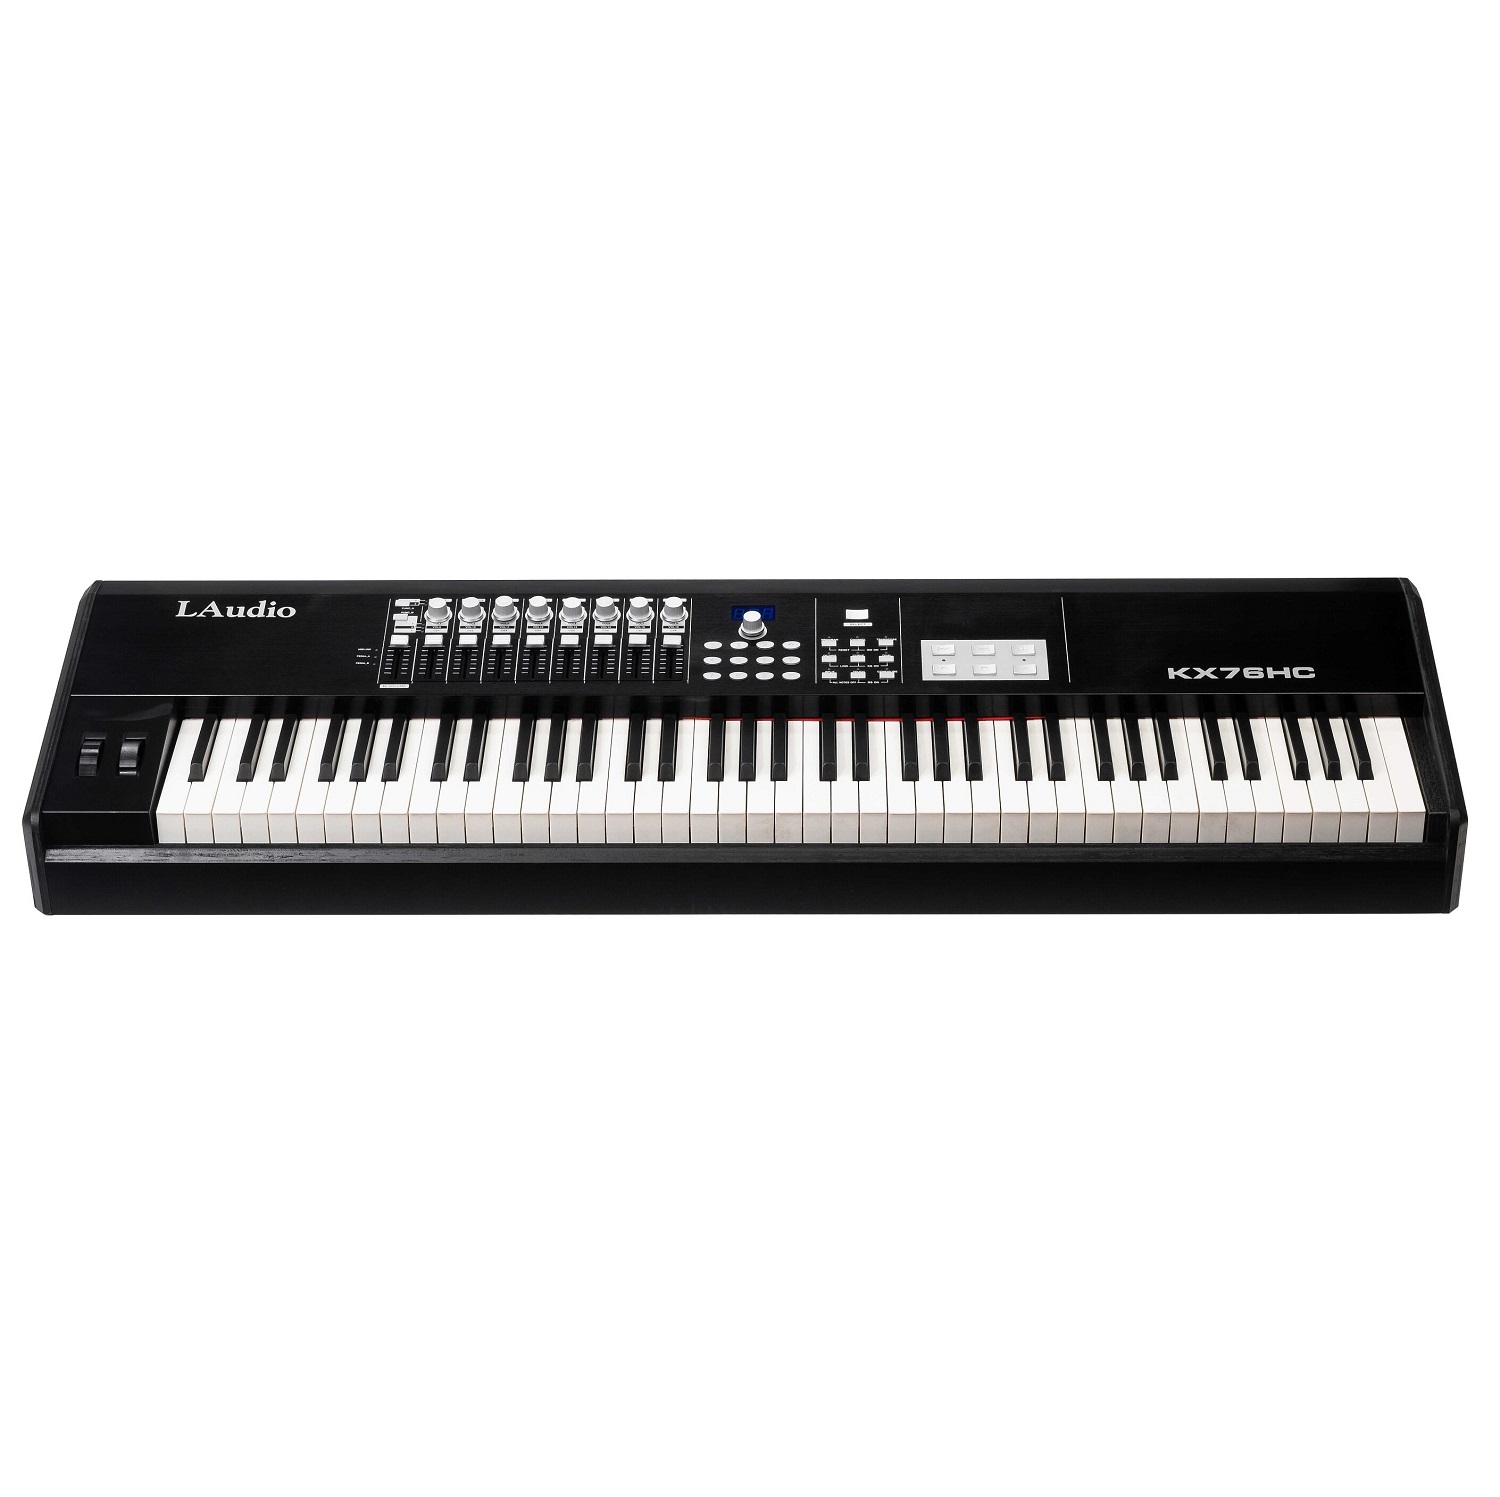 MIDI клавиатуры L Audio KX76HC worlde orca pad64 портативный usb midi контроллер для ударных